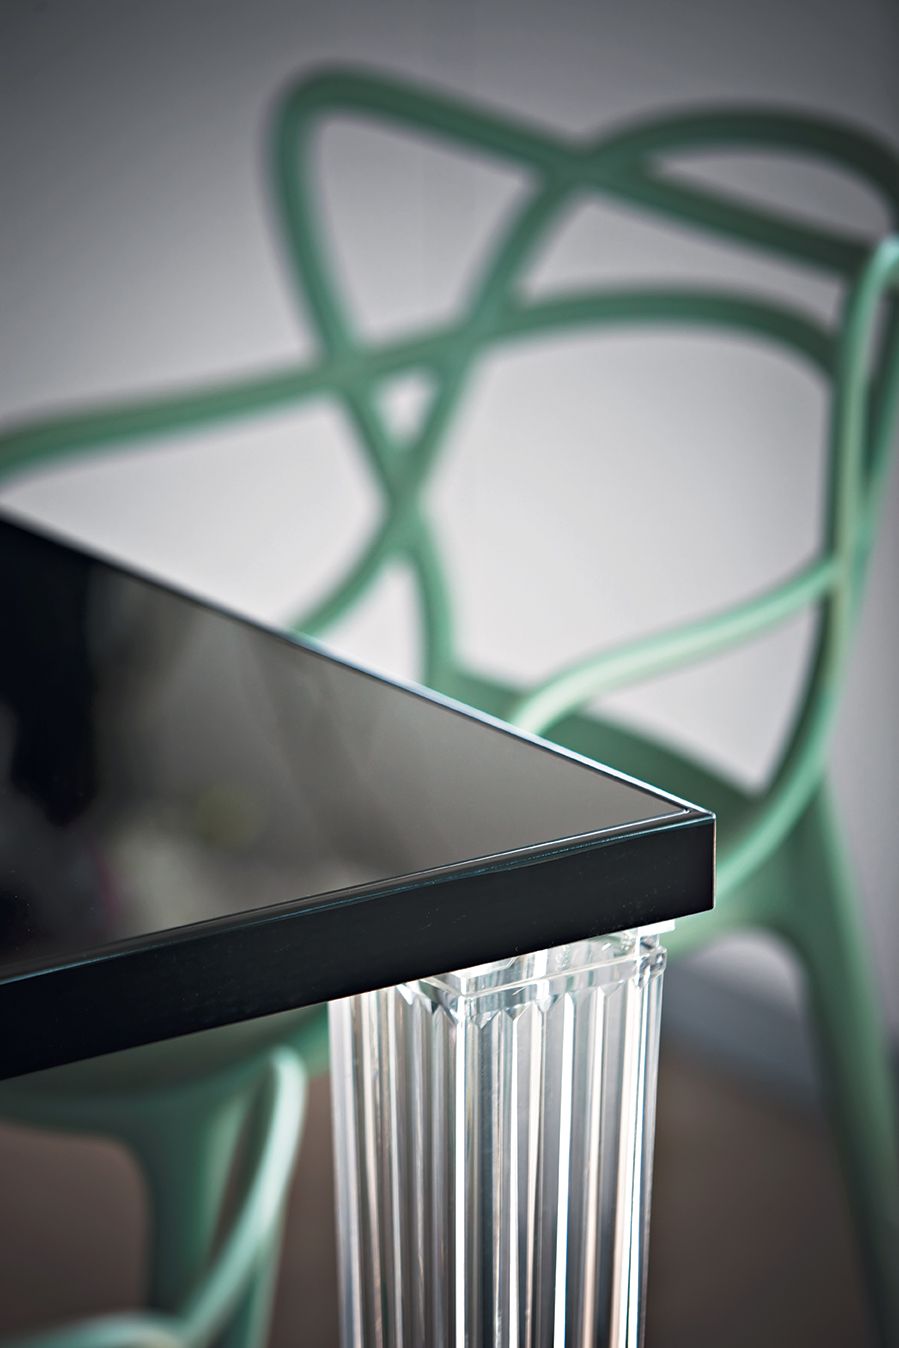 Kartell Top Top Table Glas 190x90 cm, zwart